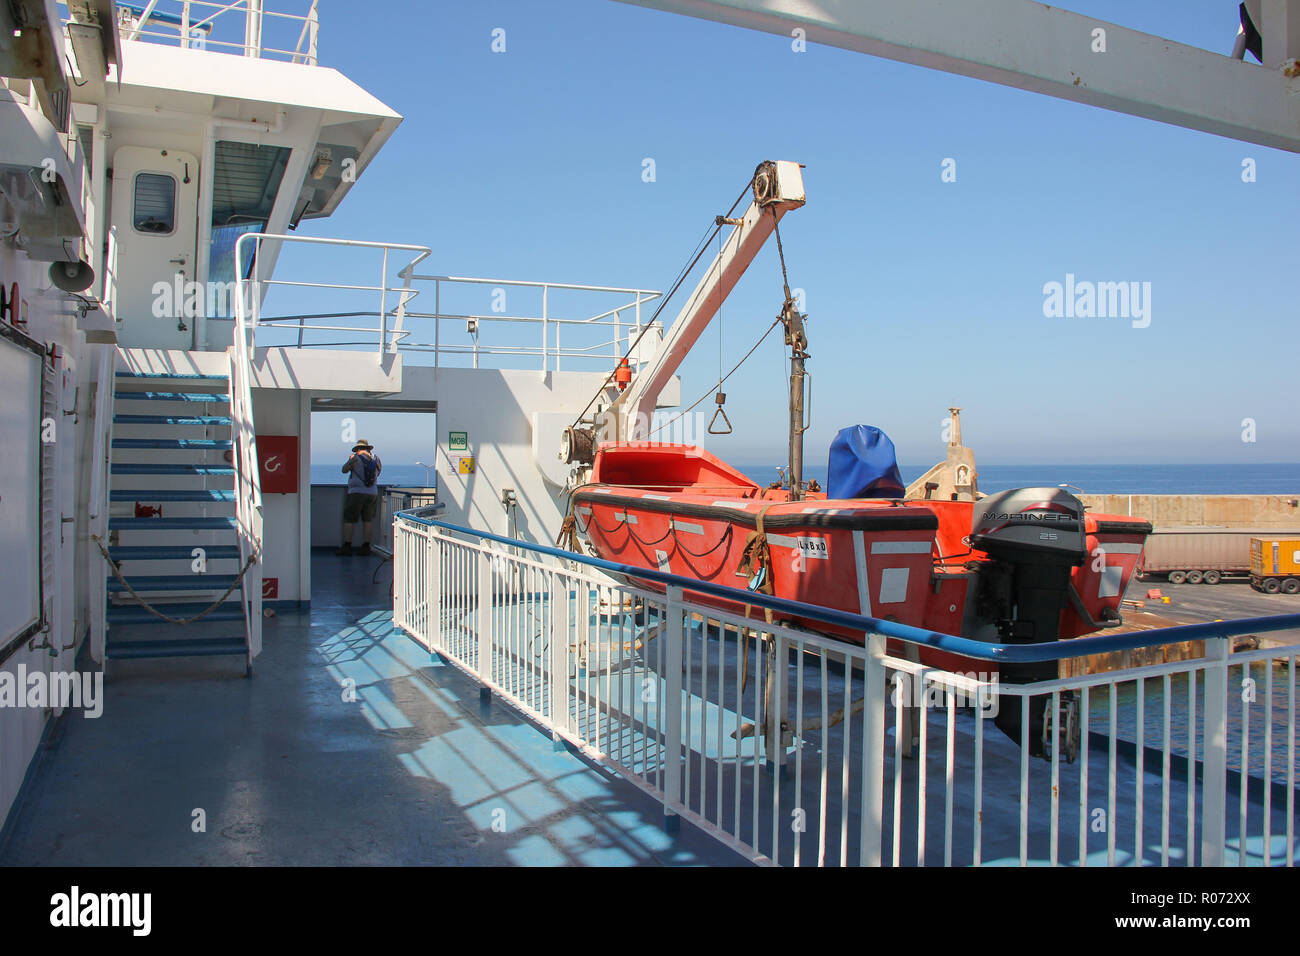 Cirkewwa, Malta - Mai 2018: Rot Rettungsboot an Deck der Fähre Schiff an Bord Stockfoto